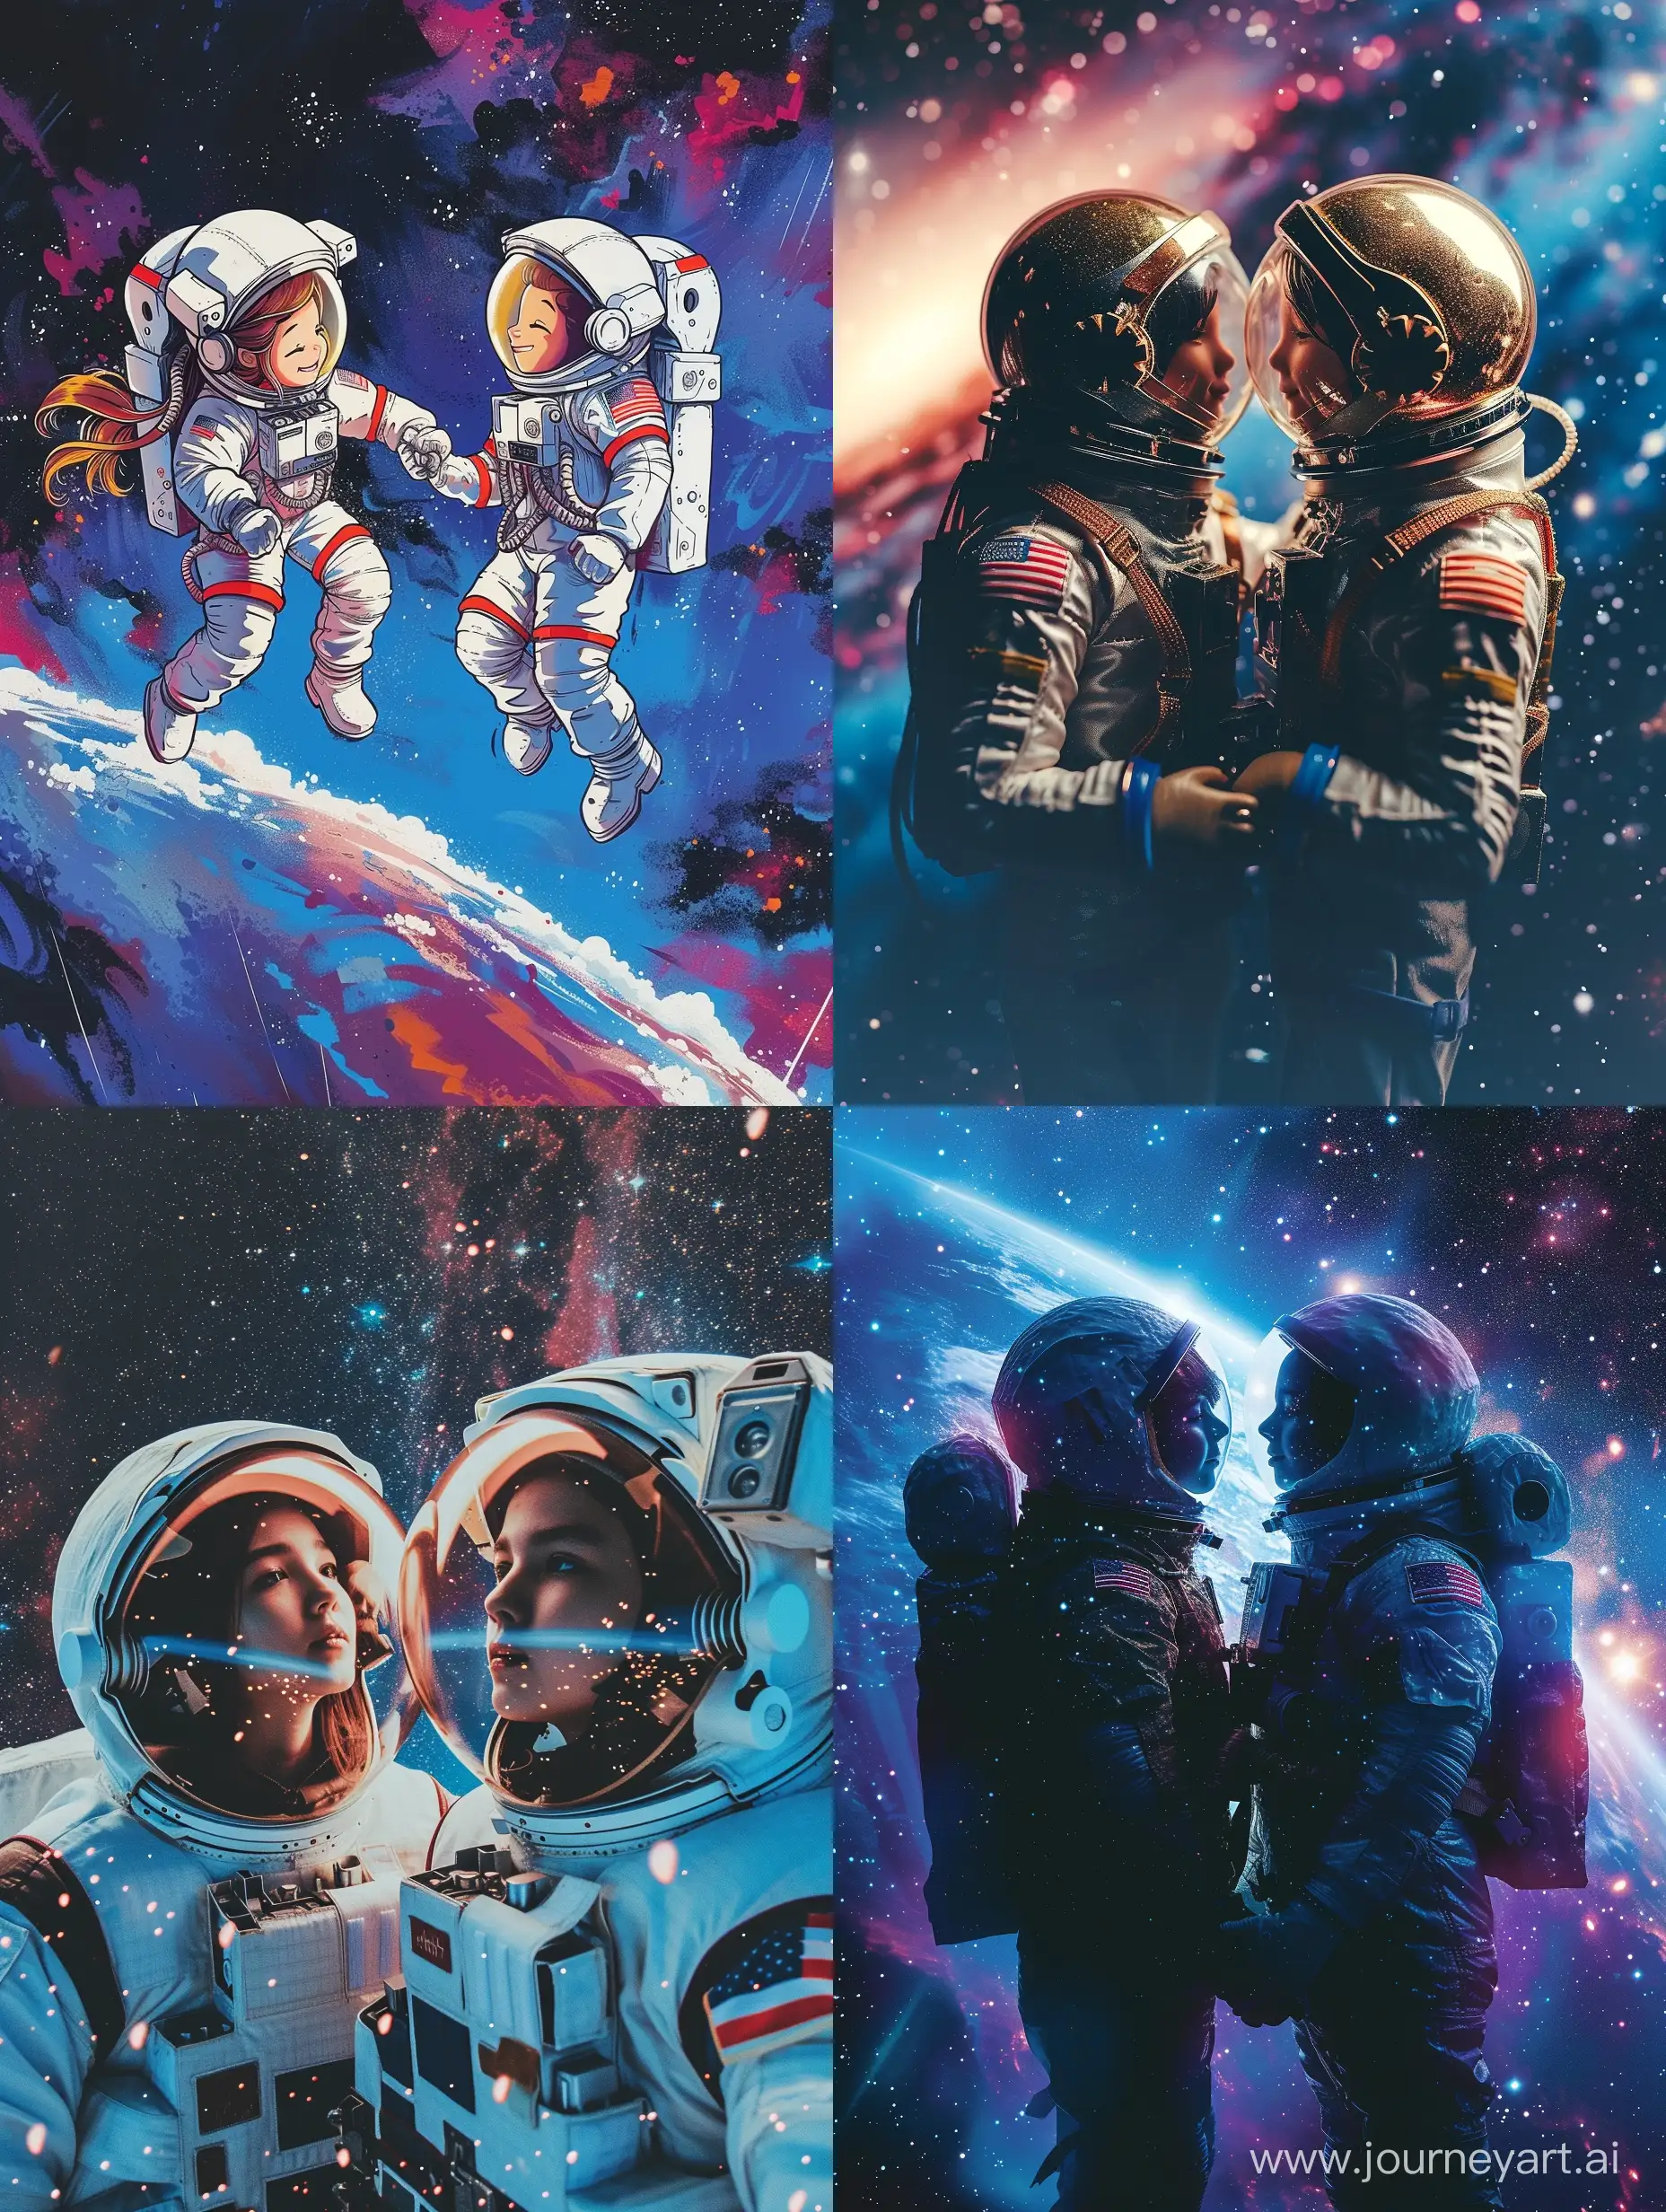 Romantic-Astronauts-Embracing-in-the-Vast-Universe